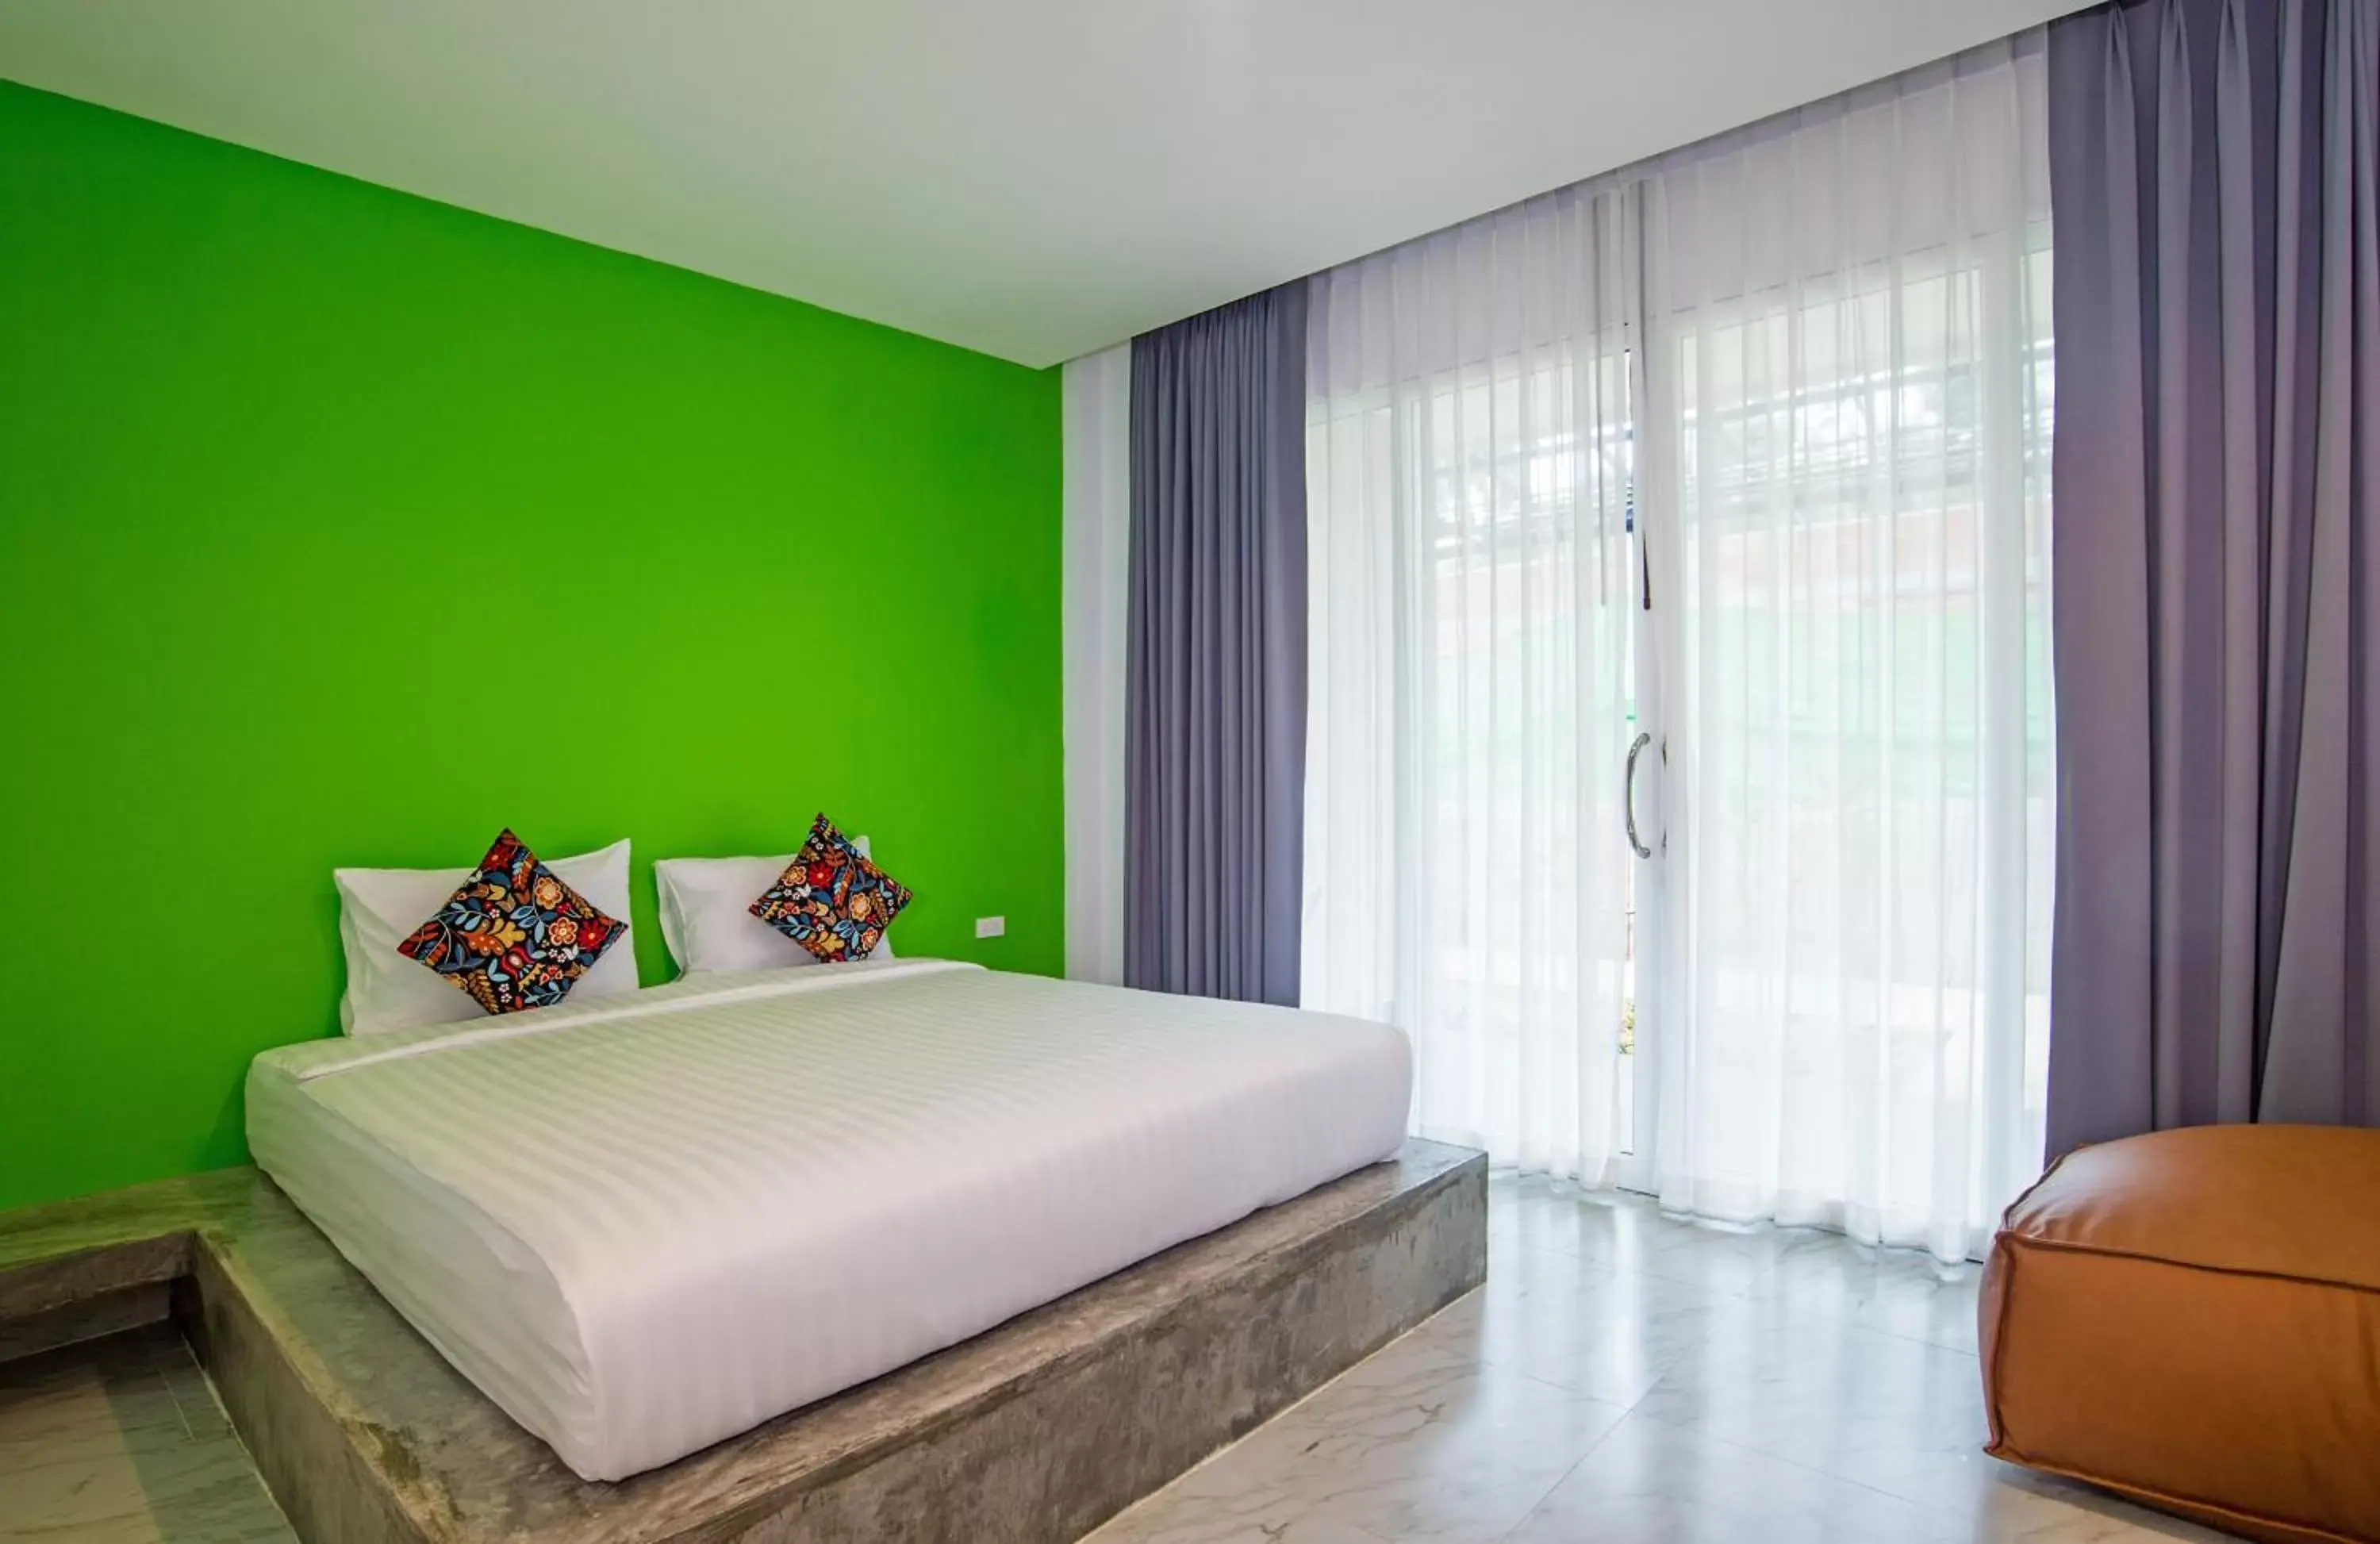 Day, Room Photo in The Fong Krabi resort